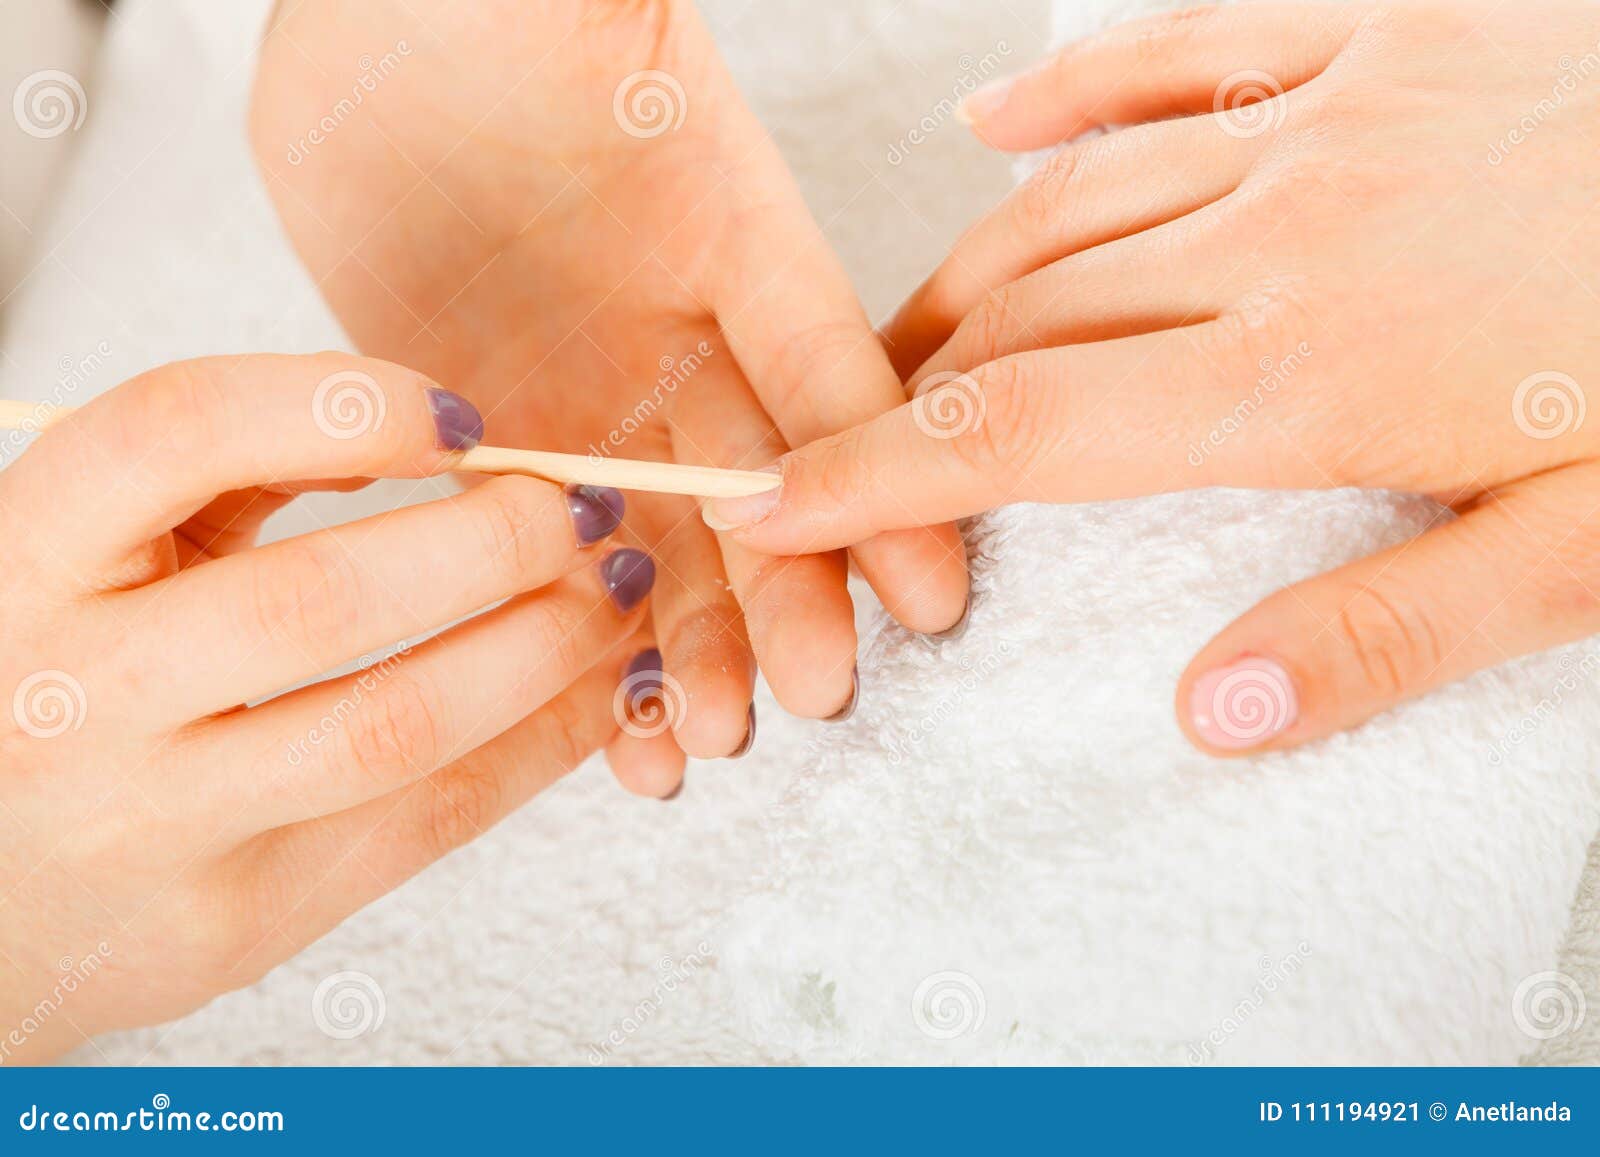 beautician preparing nails before manicure, pushing back cuticles